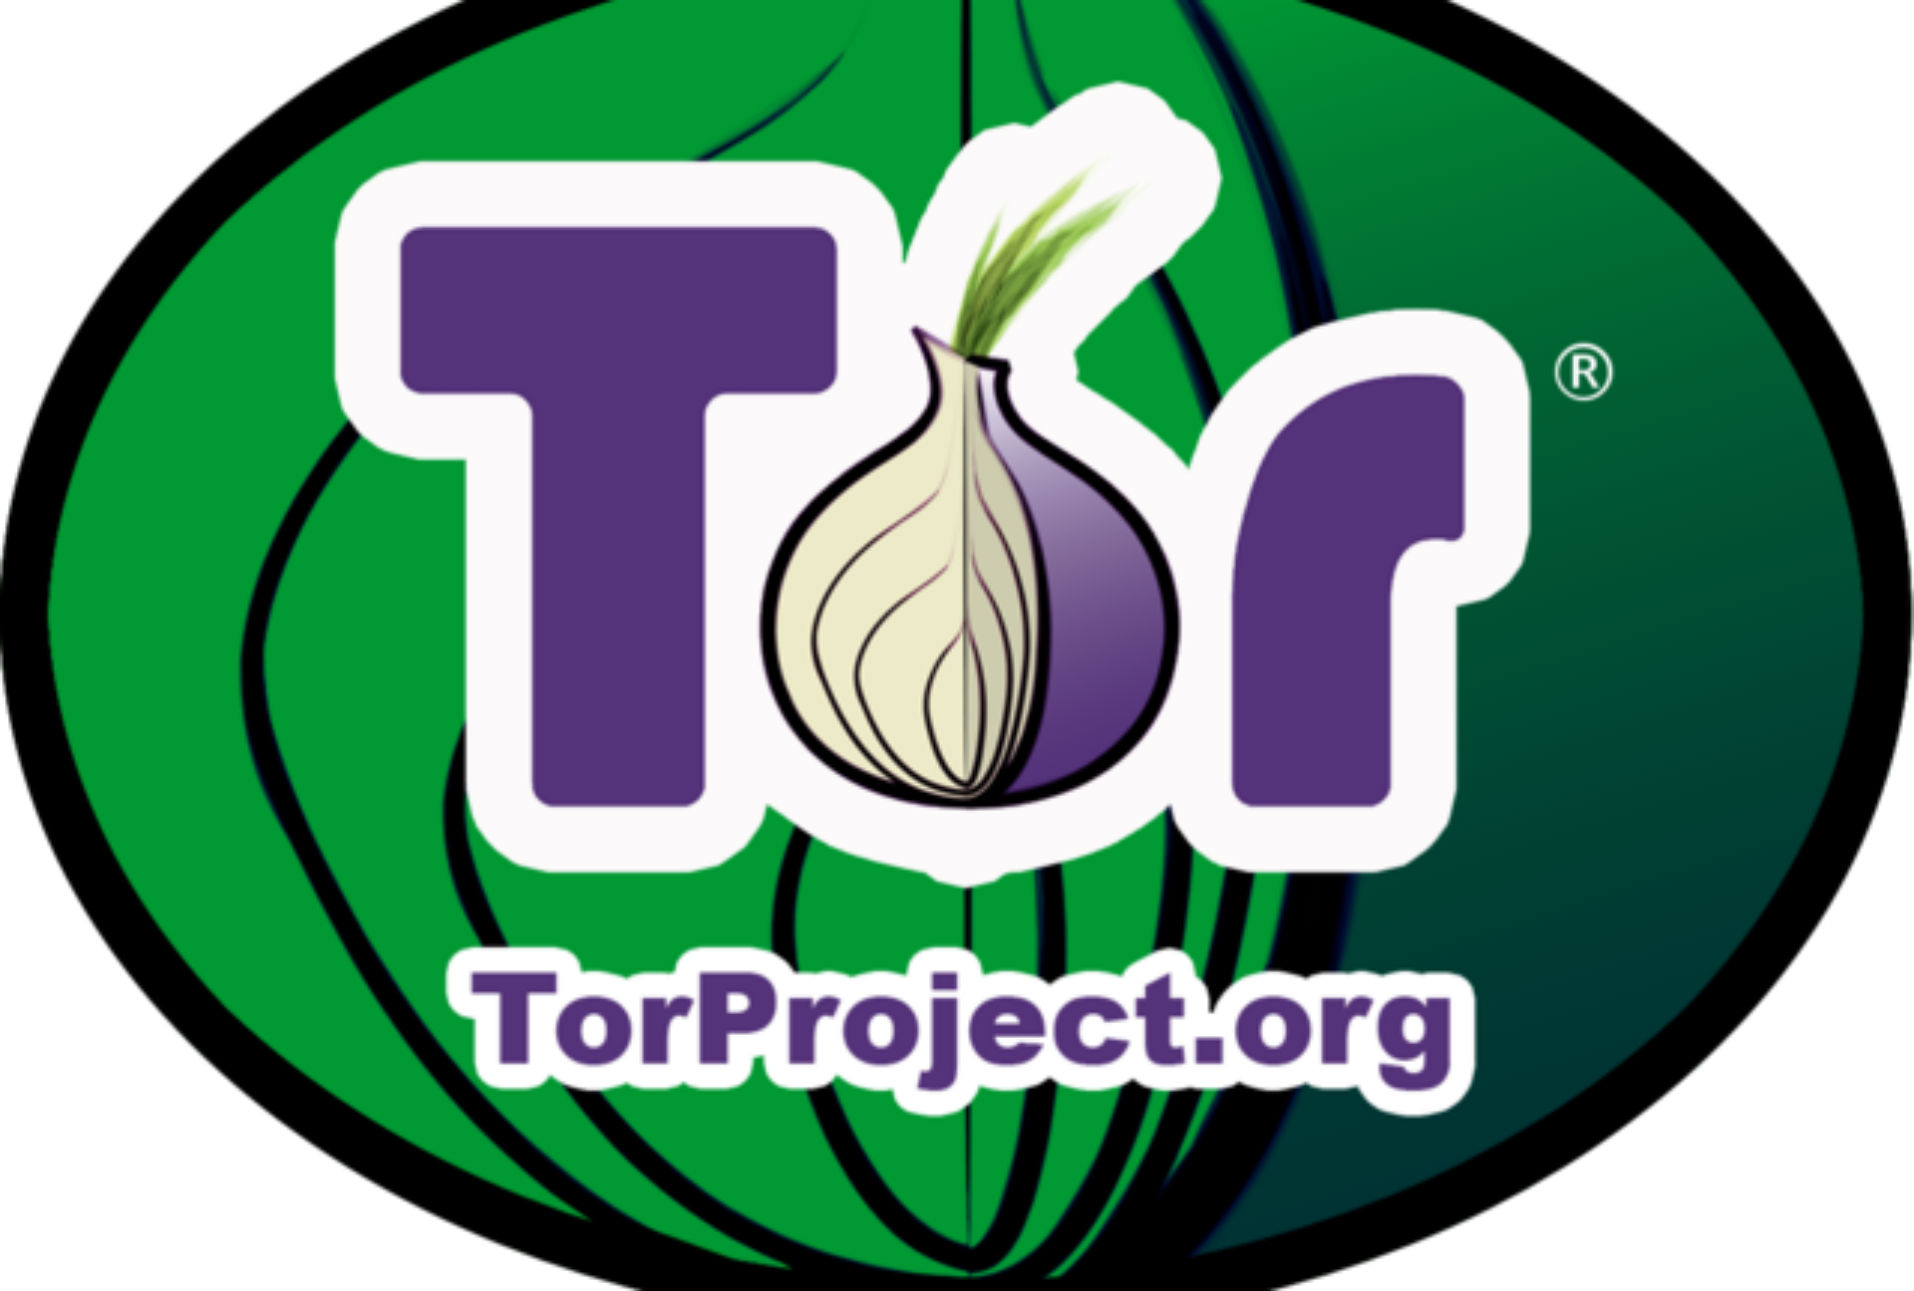 Dos millones de usuarios de Internet usan diariamente Tor: ¿en qué países?